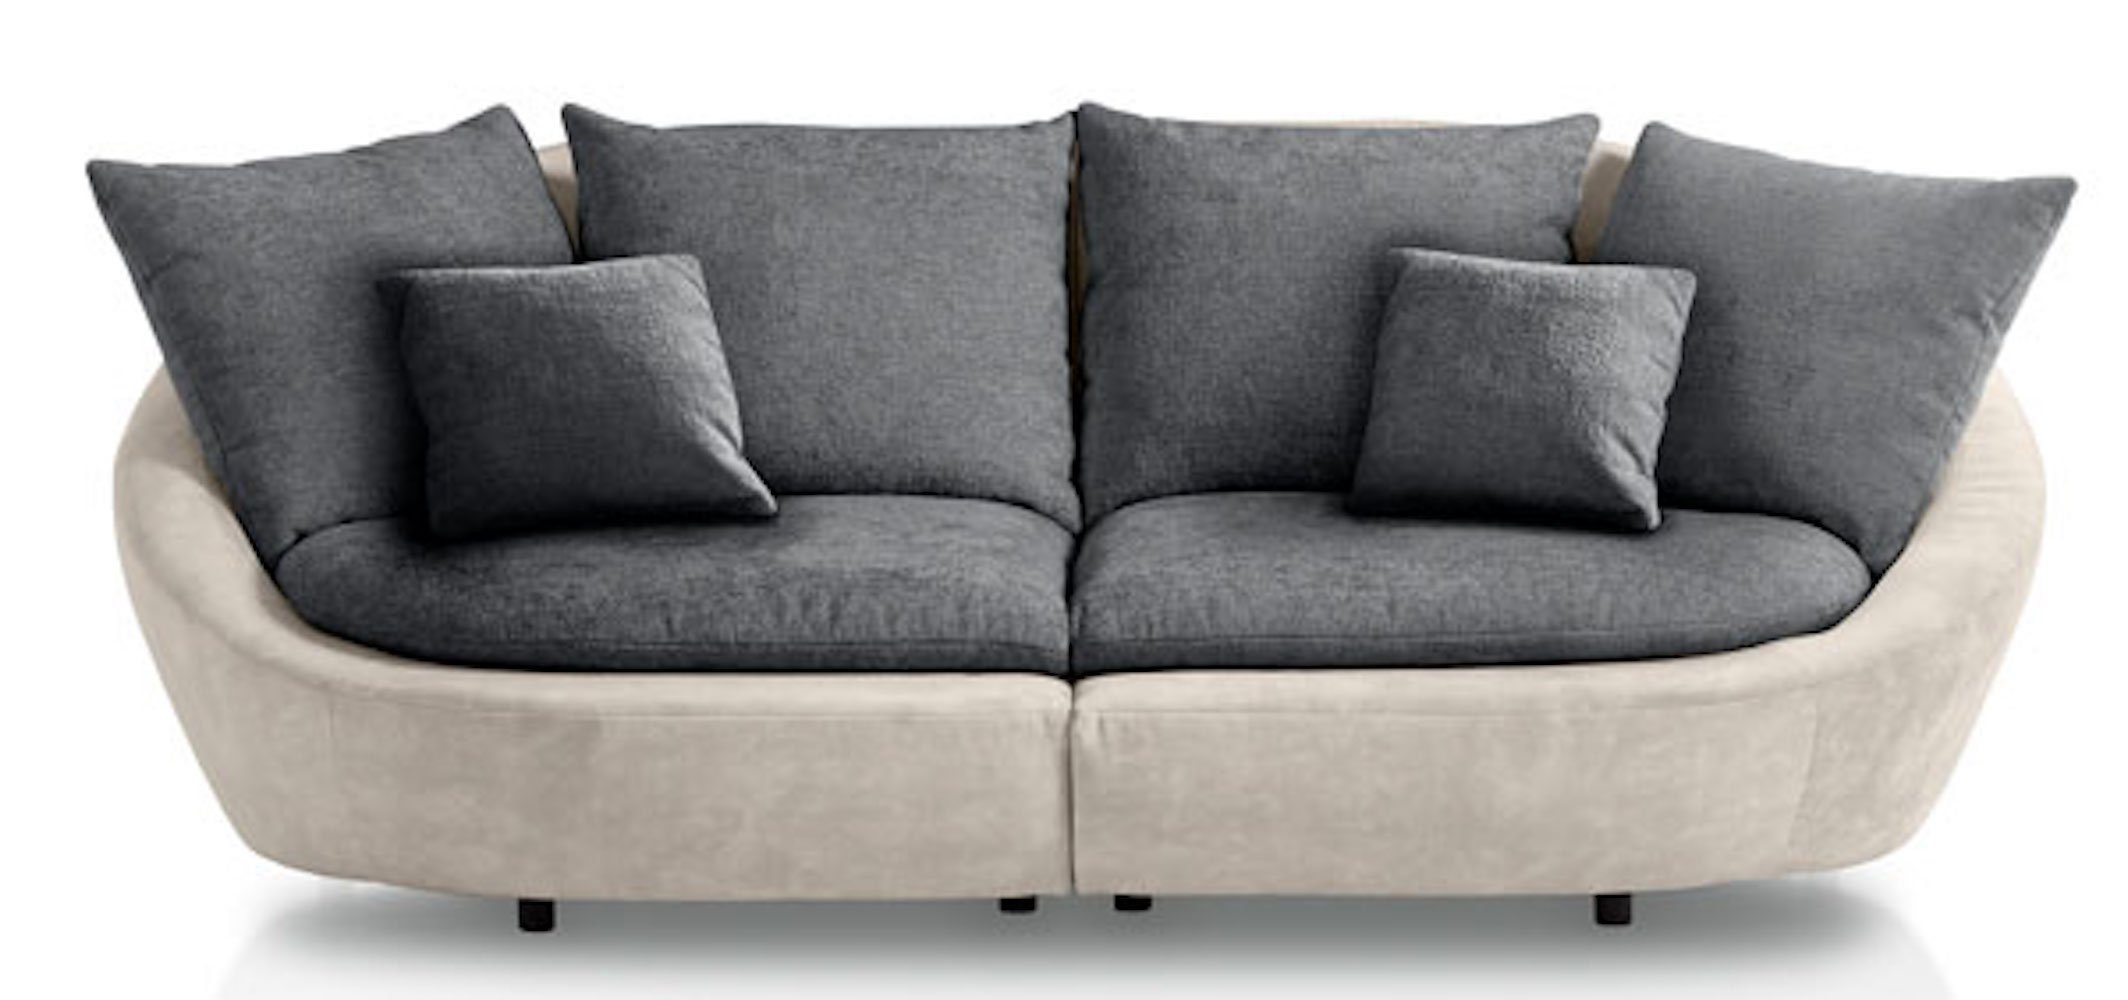 Big-Sofa cremeweiß dunkelgrau mit Feldmann-Wohnen Kissen 280x129x87cm Moroni, /